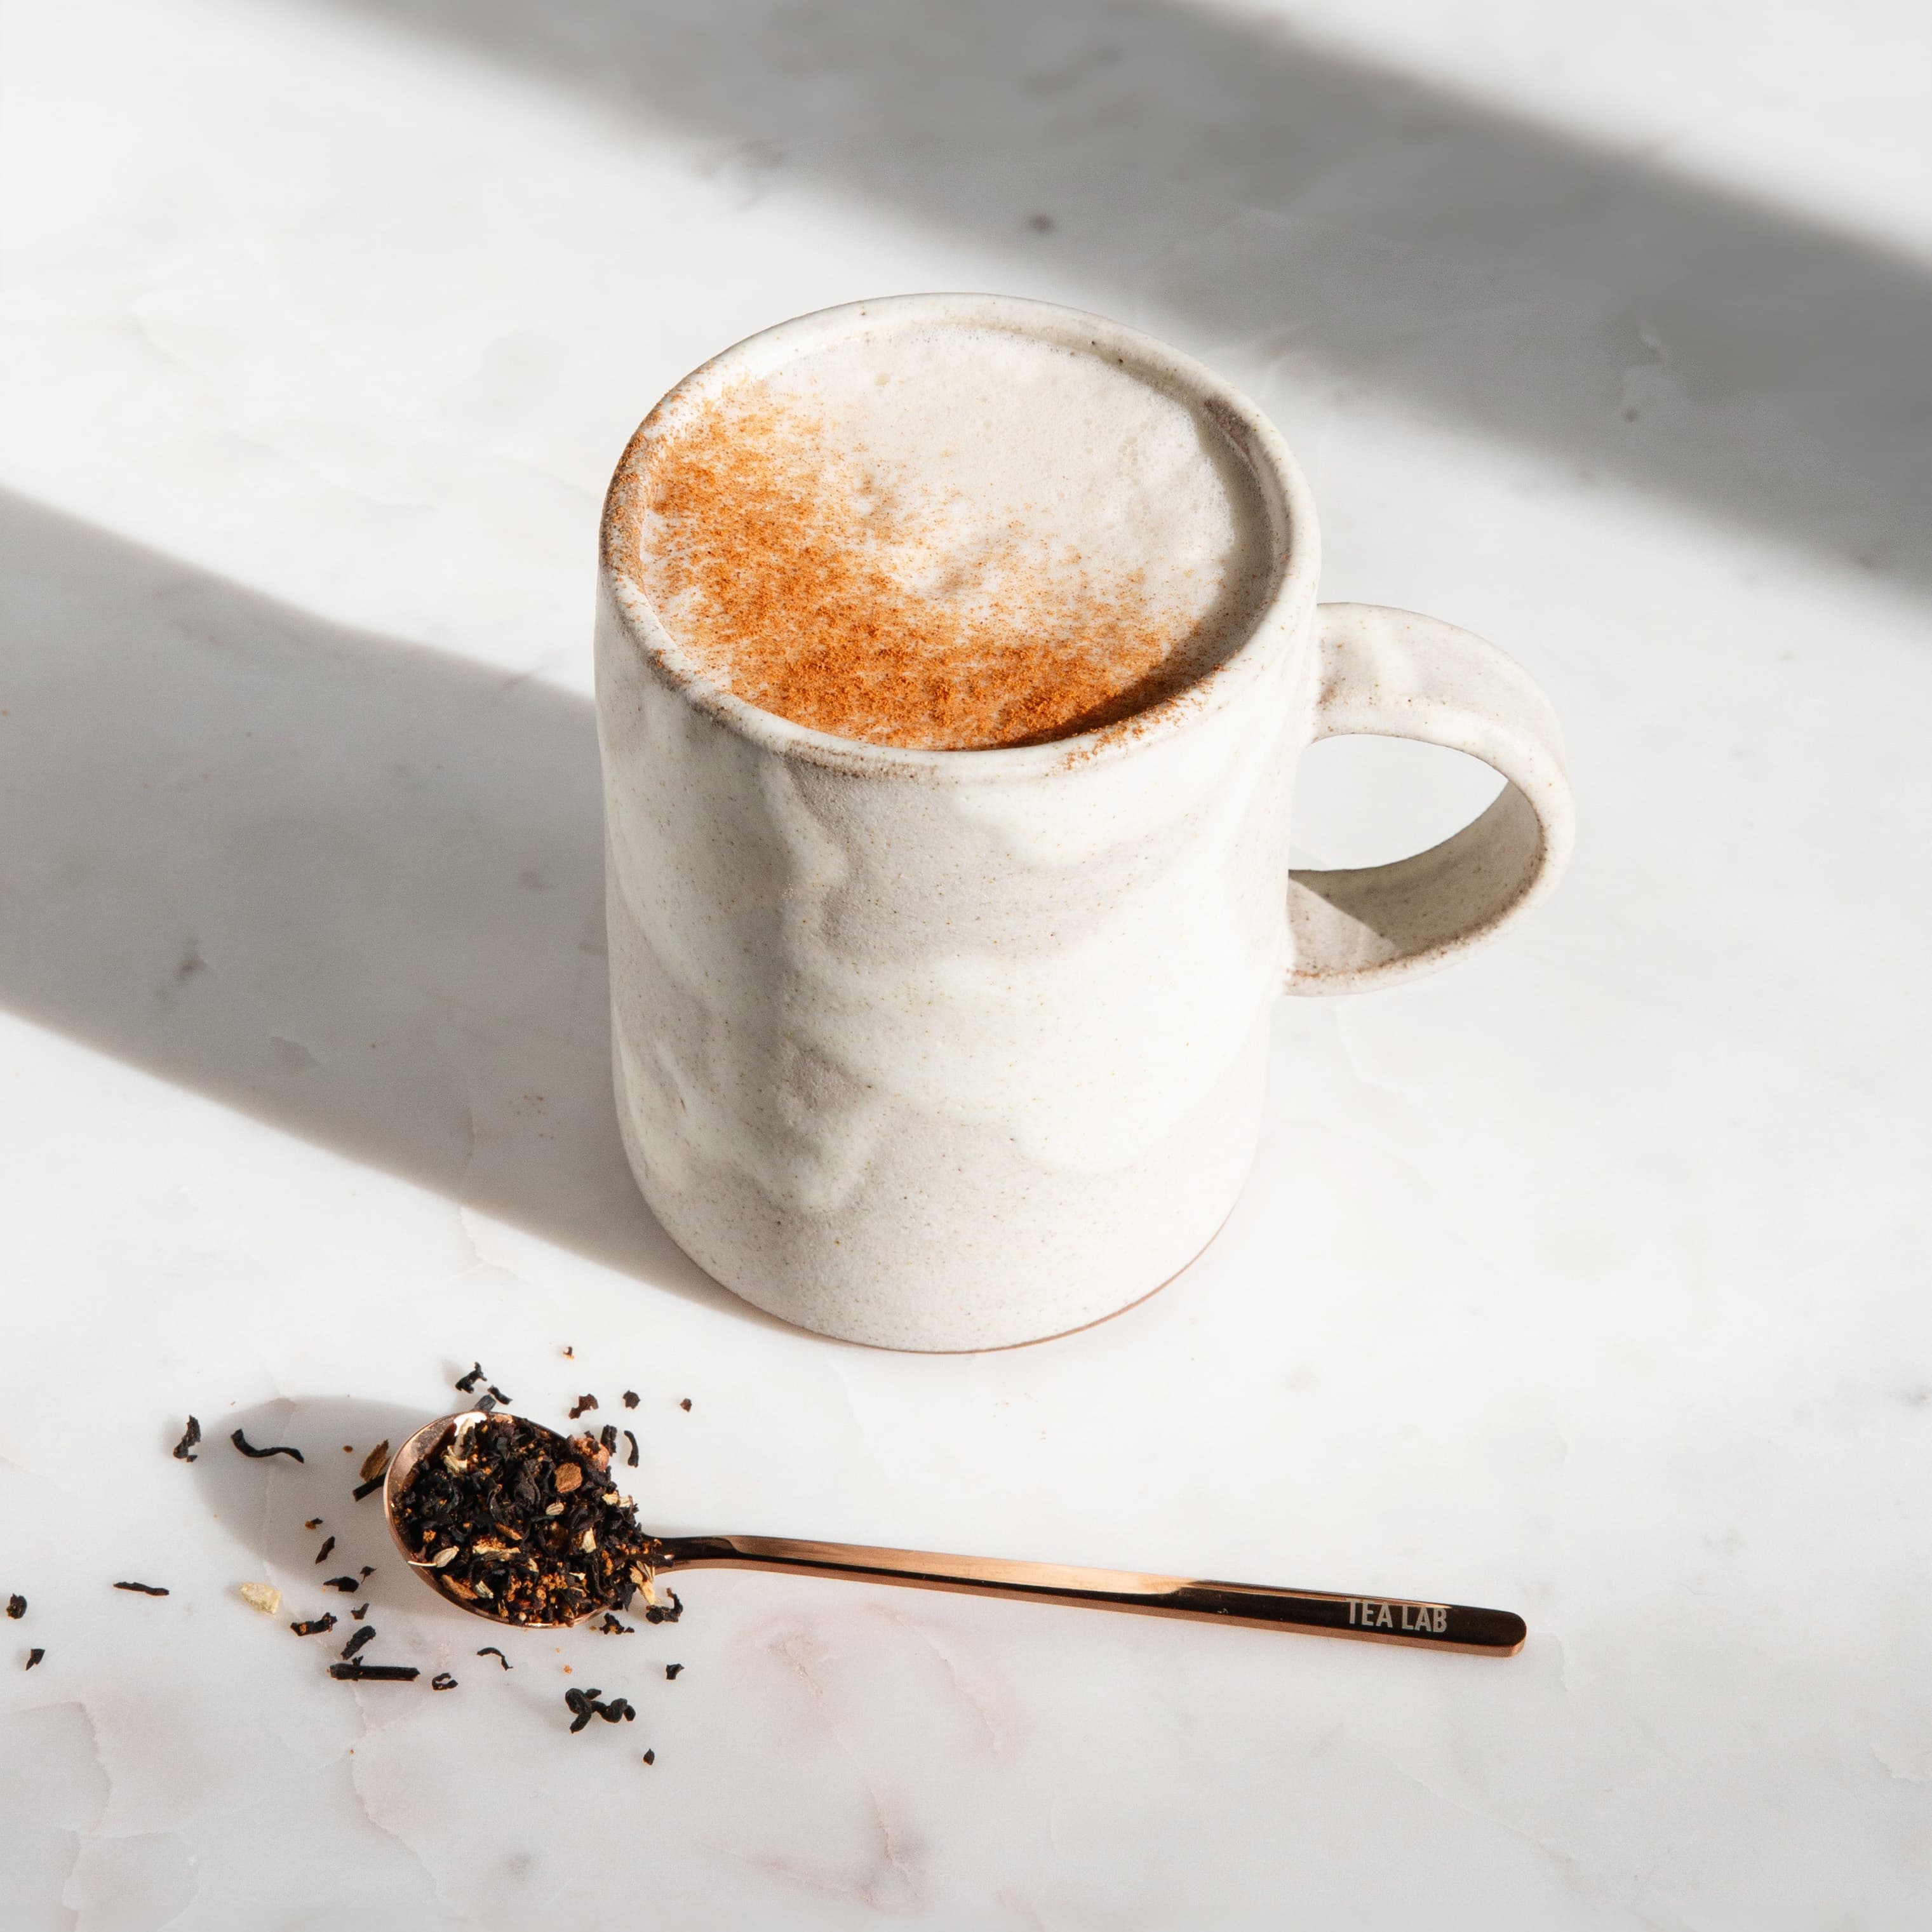 Gingerbread black tea latte with cinnamon